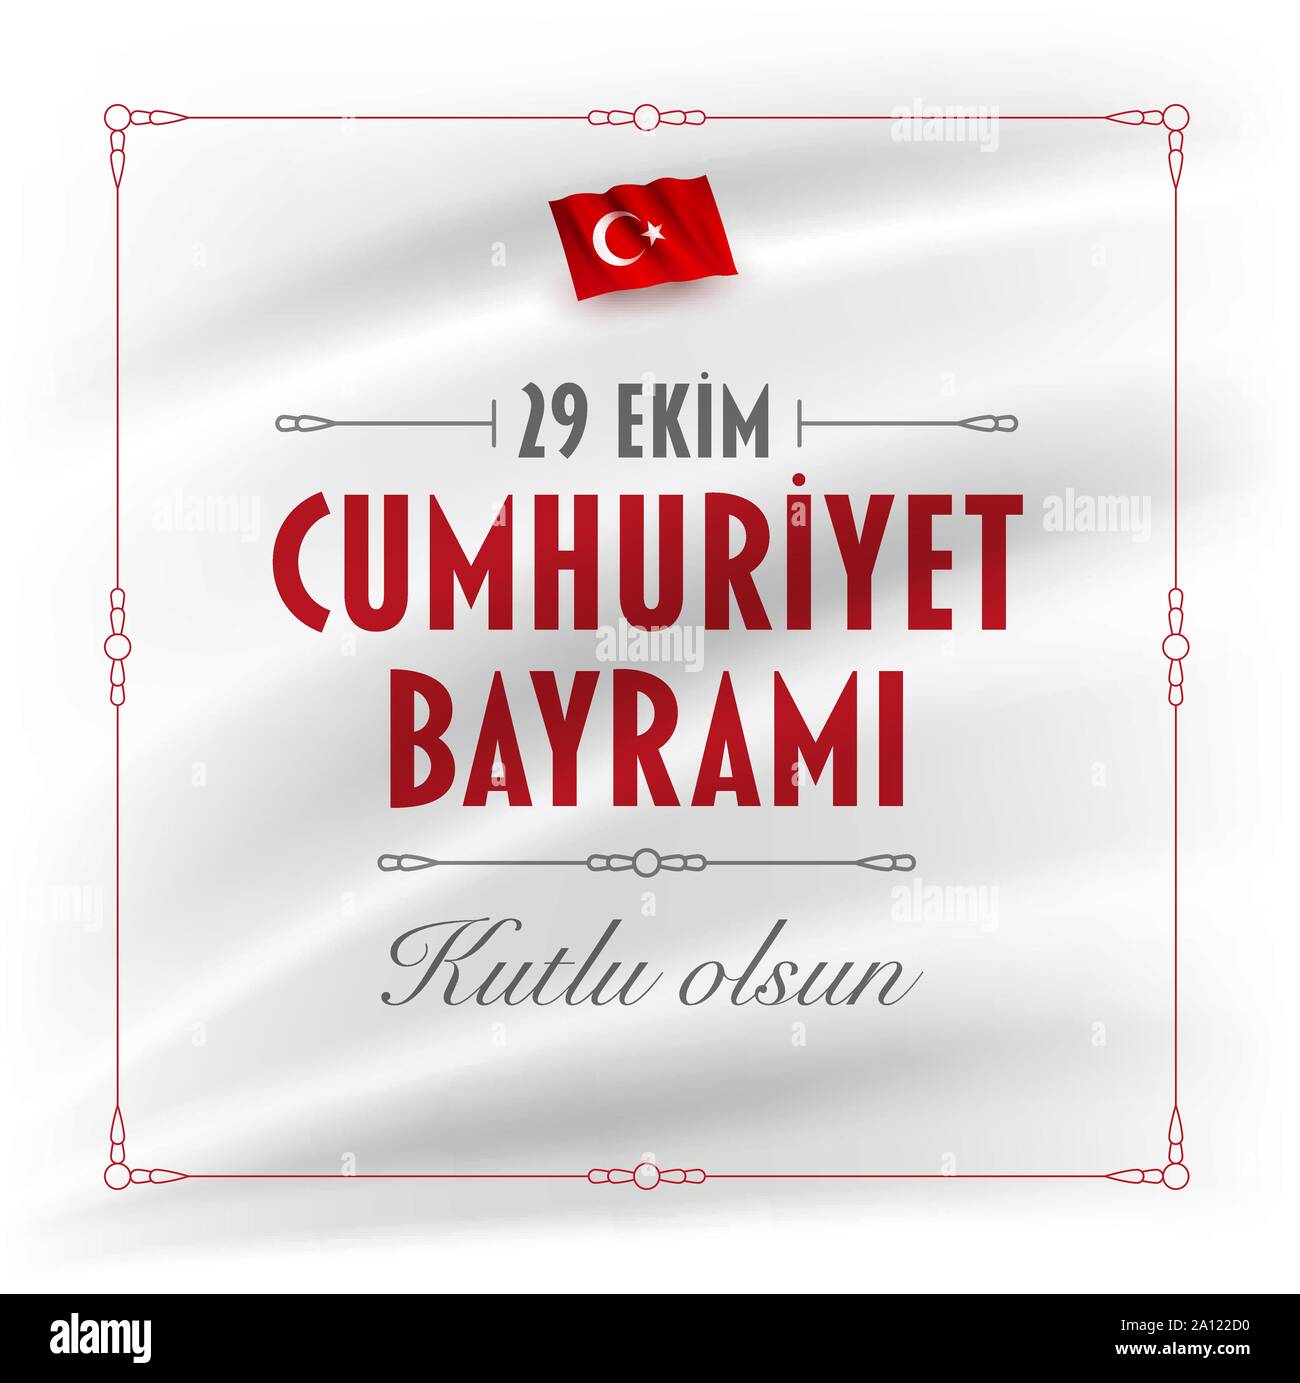 Turkish National Festival. 29 Ekim Cumhuriyet Bayrami. Translation: Happy October 29th Republic Day. National Day in Turkey. Typographic design for so Stock Vector